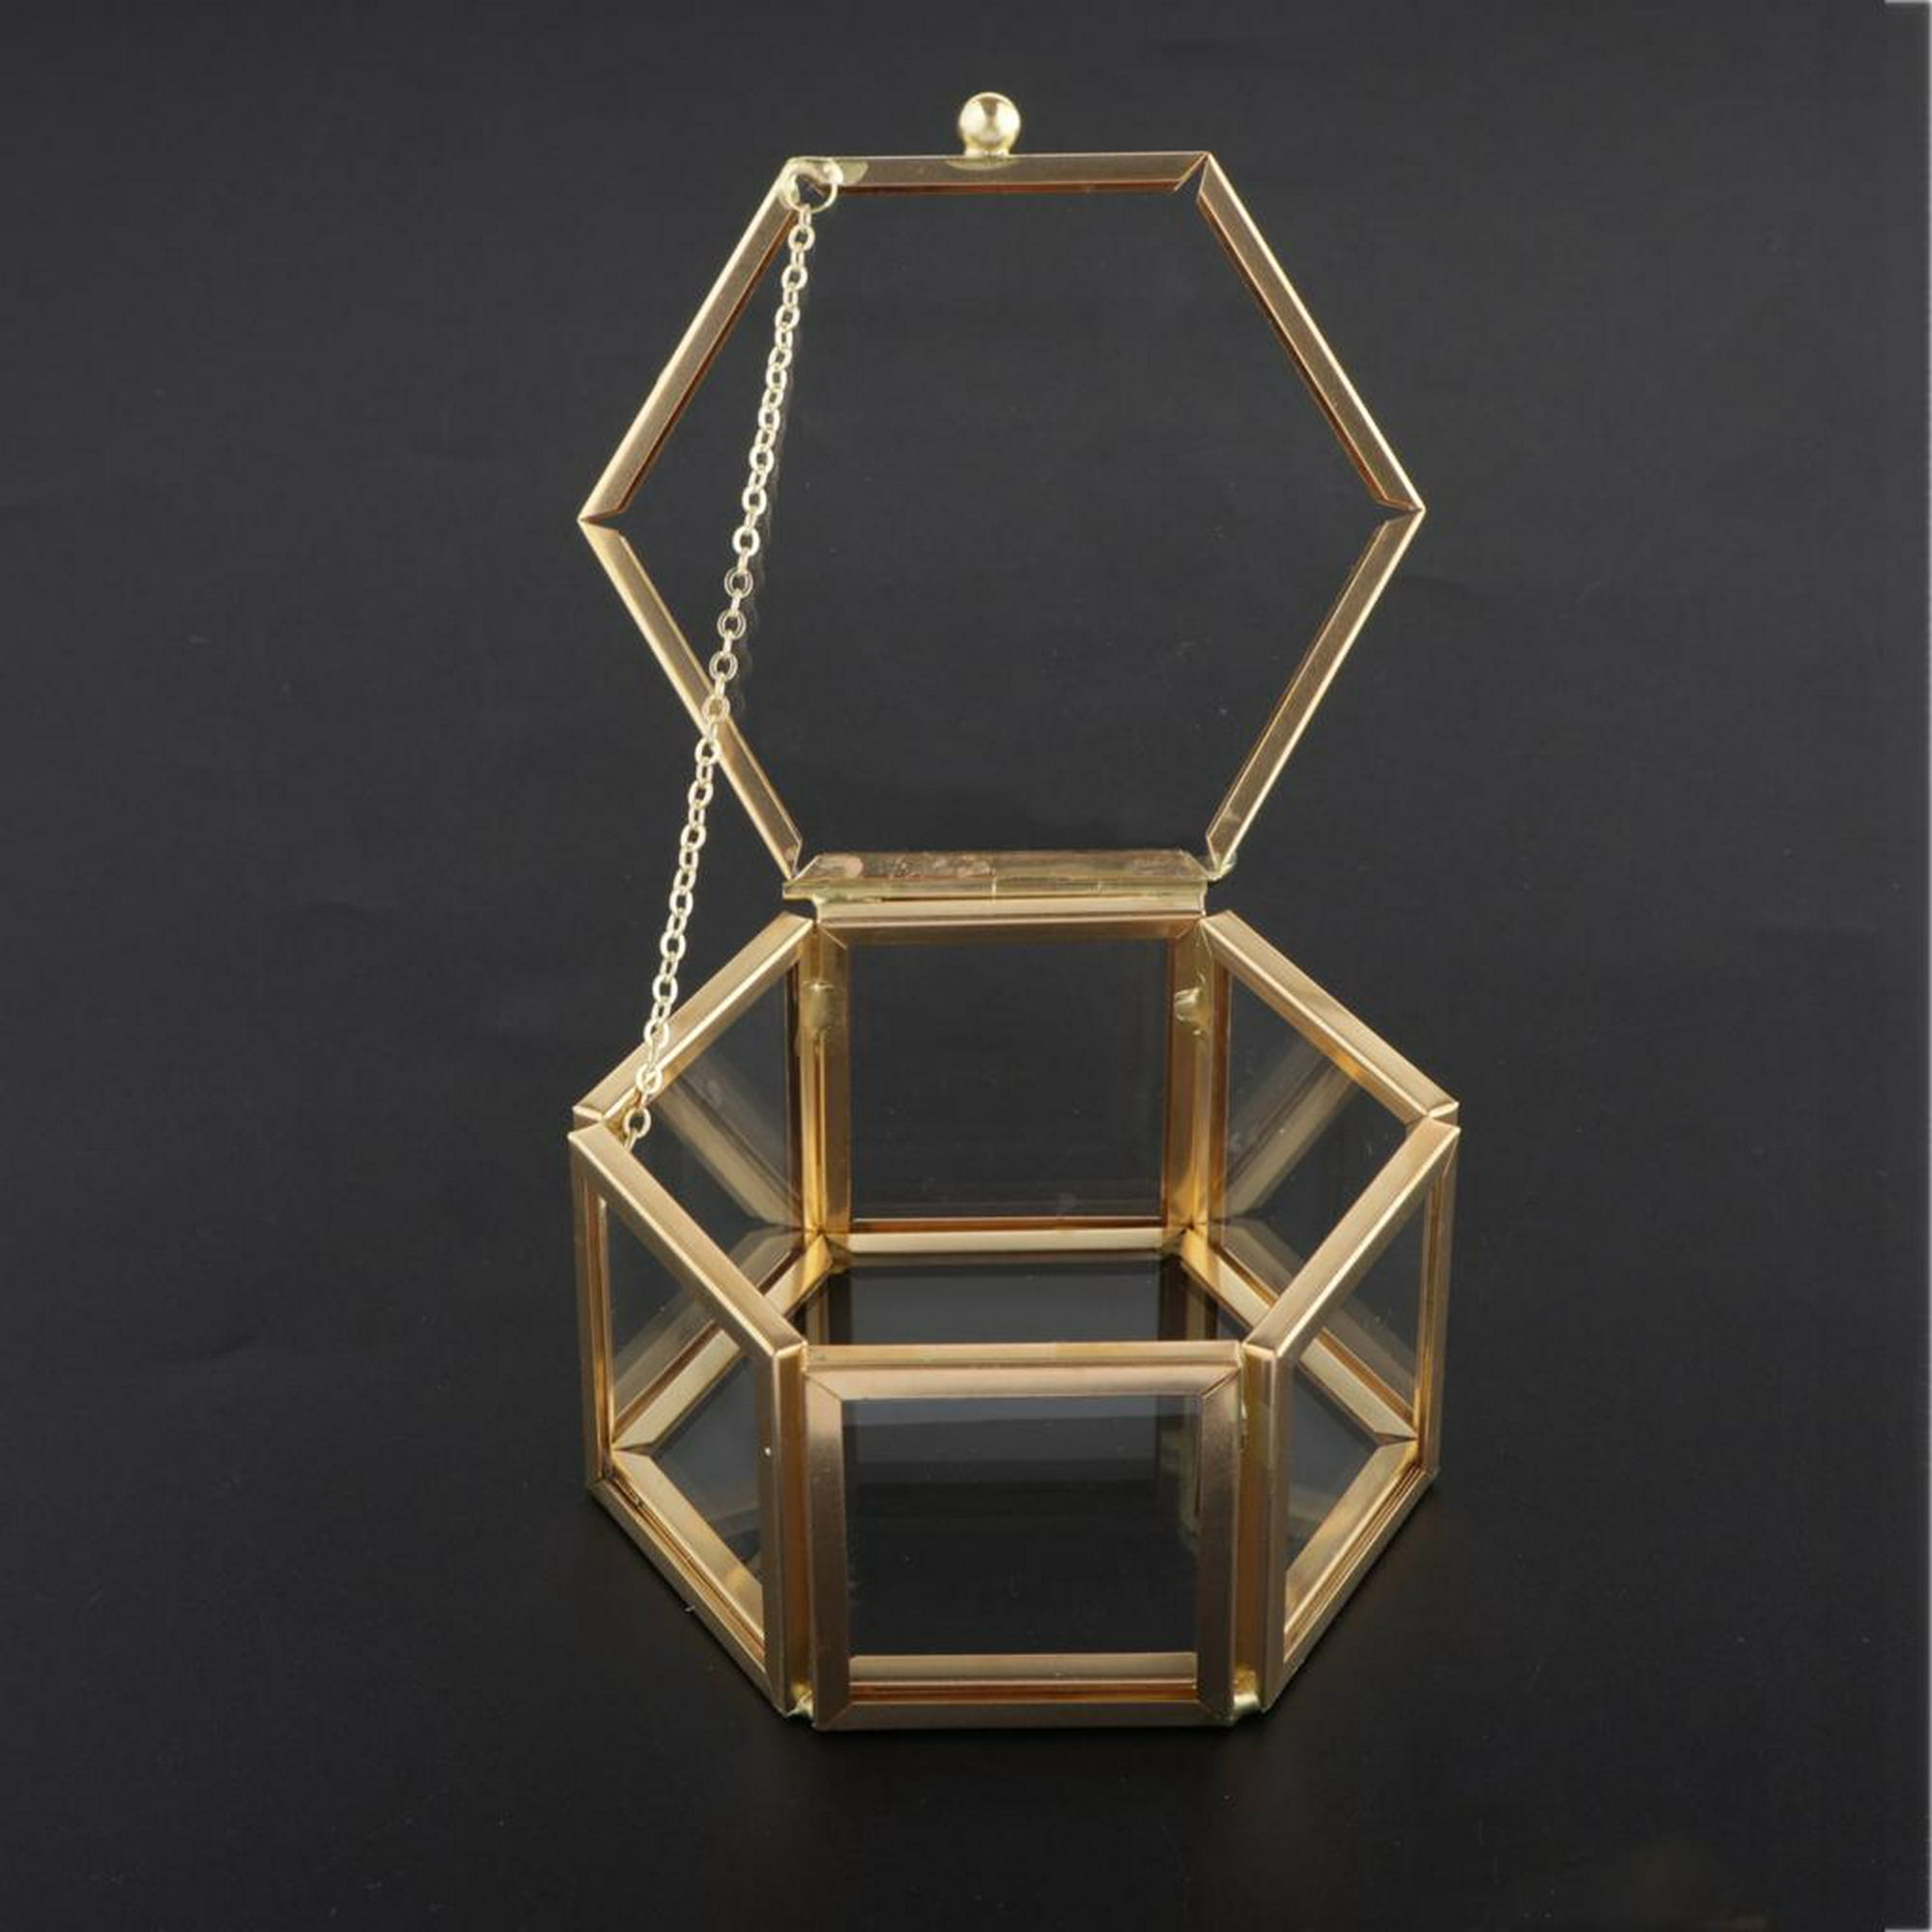  Caja de cristal de flores de 2 piezas, caja decorativa de  joyería de cristal hexagonal, caja de cristal de joyería de baratija caja  de cristal de anillo adornado caja de cristal